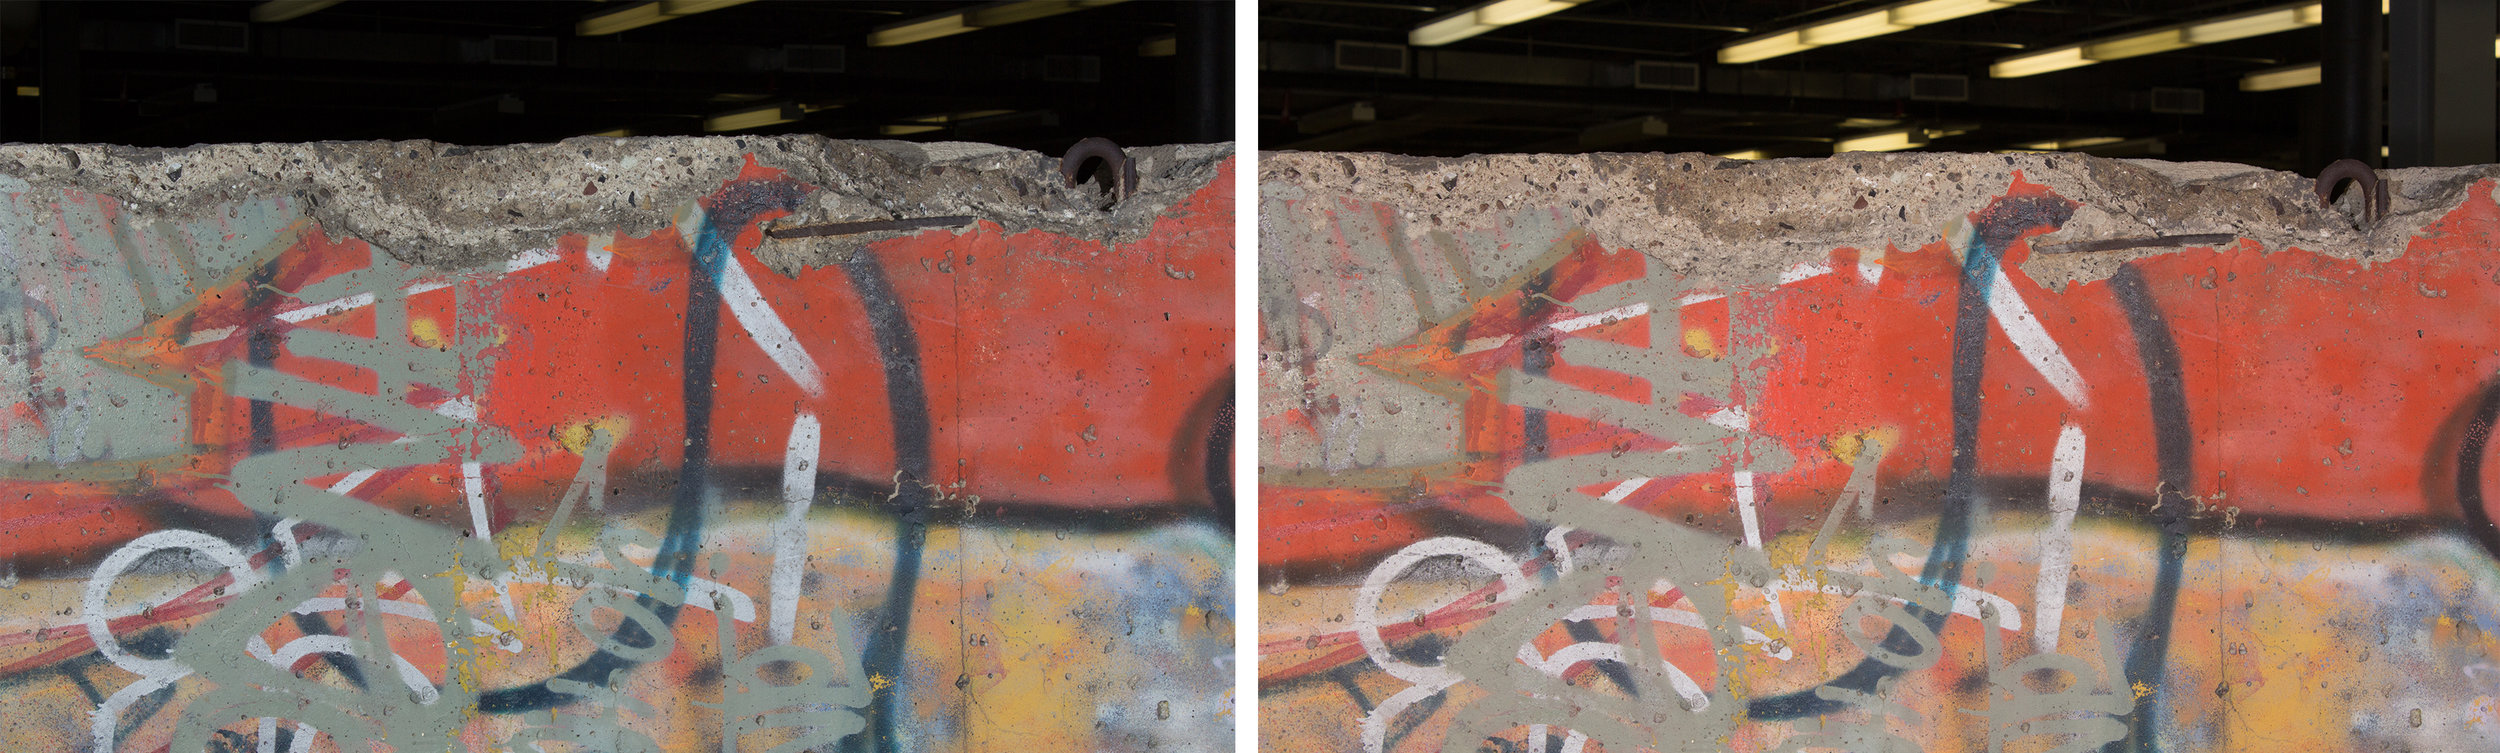  Results of the concrete cleaning. Before (left), After (right).&nbsp;&nbsp;    
  
 
  
    
  
 Normal 
 0 
 
 
 
 
 false 
 false 
 false 
 
 EN-US 
 JA 
 X-NONE 
 
  
  
  
  
  
  
  
  
  
  
 
 
  
  
  
  
  
  
  
  
  
  
  
  
    
  
 
 
